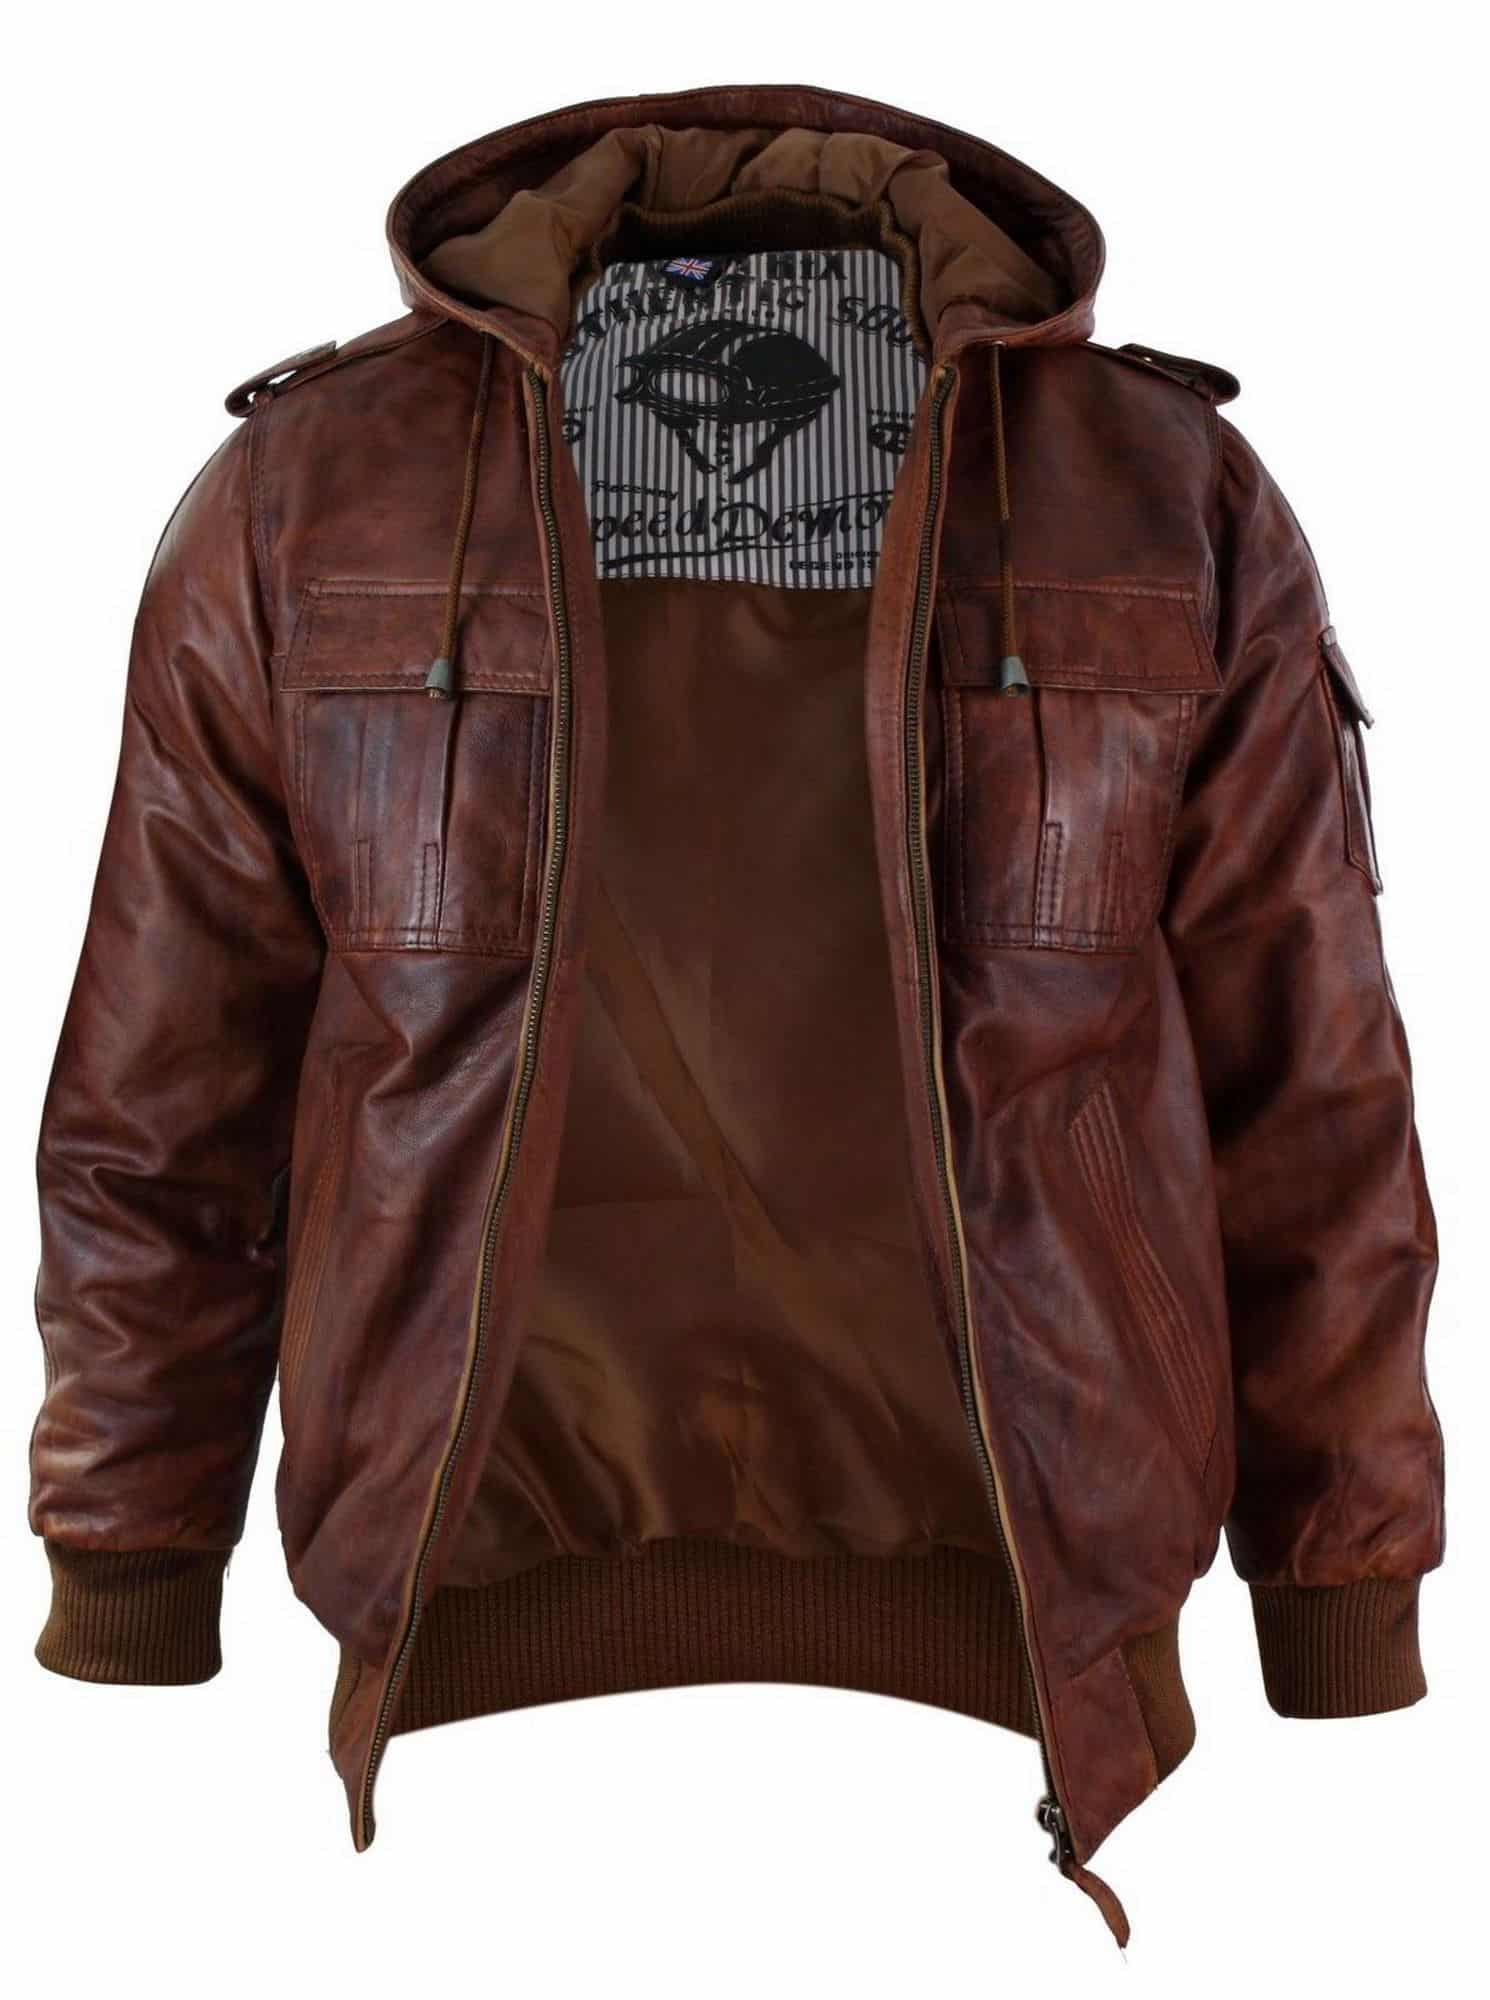 Mens Real Leather Hood Bomber Jacket Tan Timber Brown Washed Vintage ...